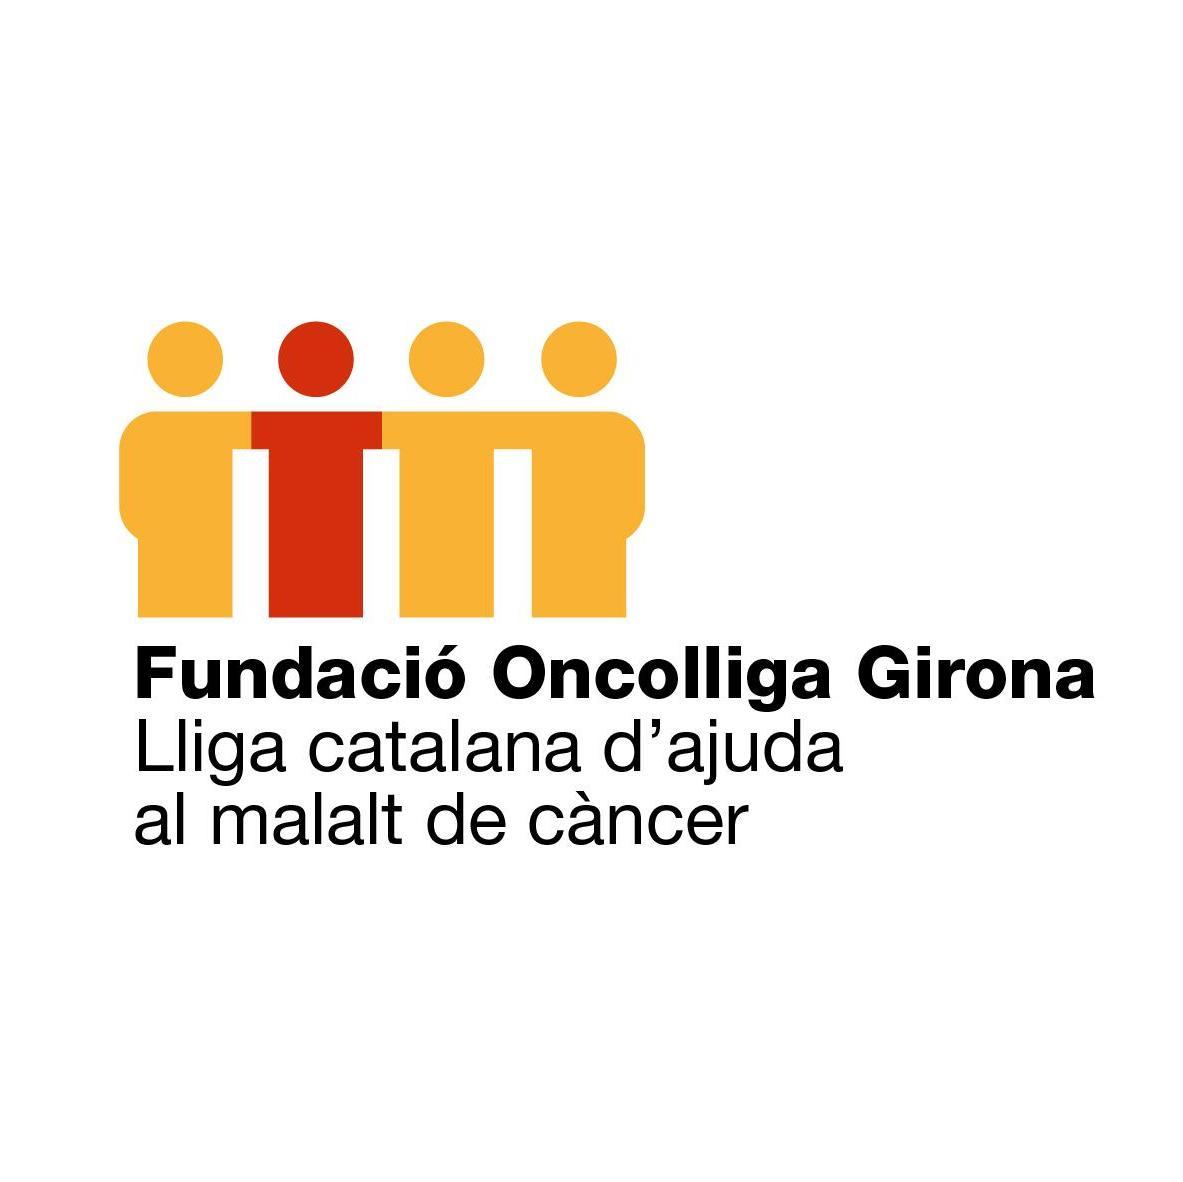 Fundació Oncolliga Girona Profile, news, ratings and communication